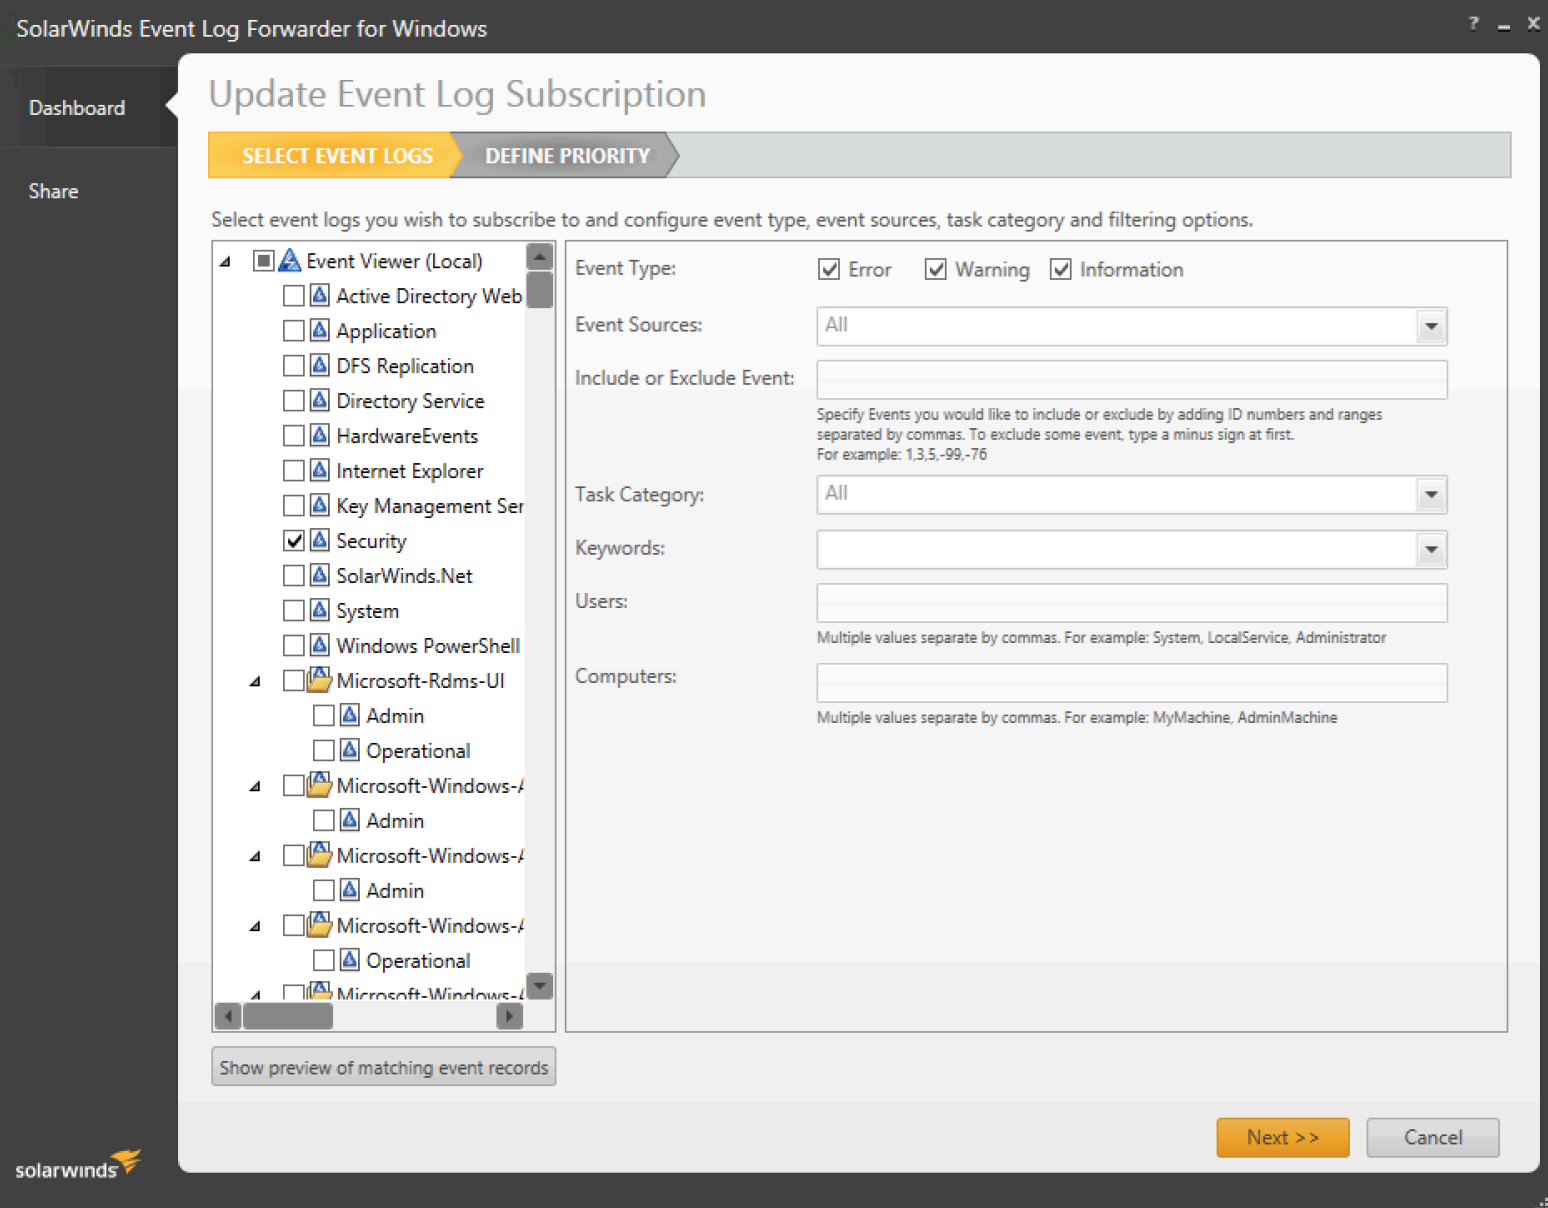 Microsoft RADIUS Integration - update event log subscription